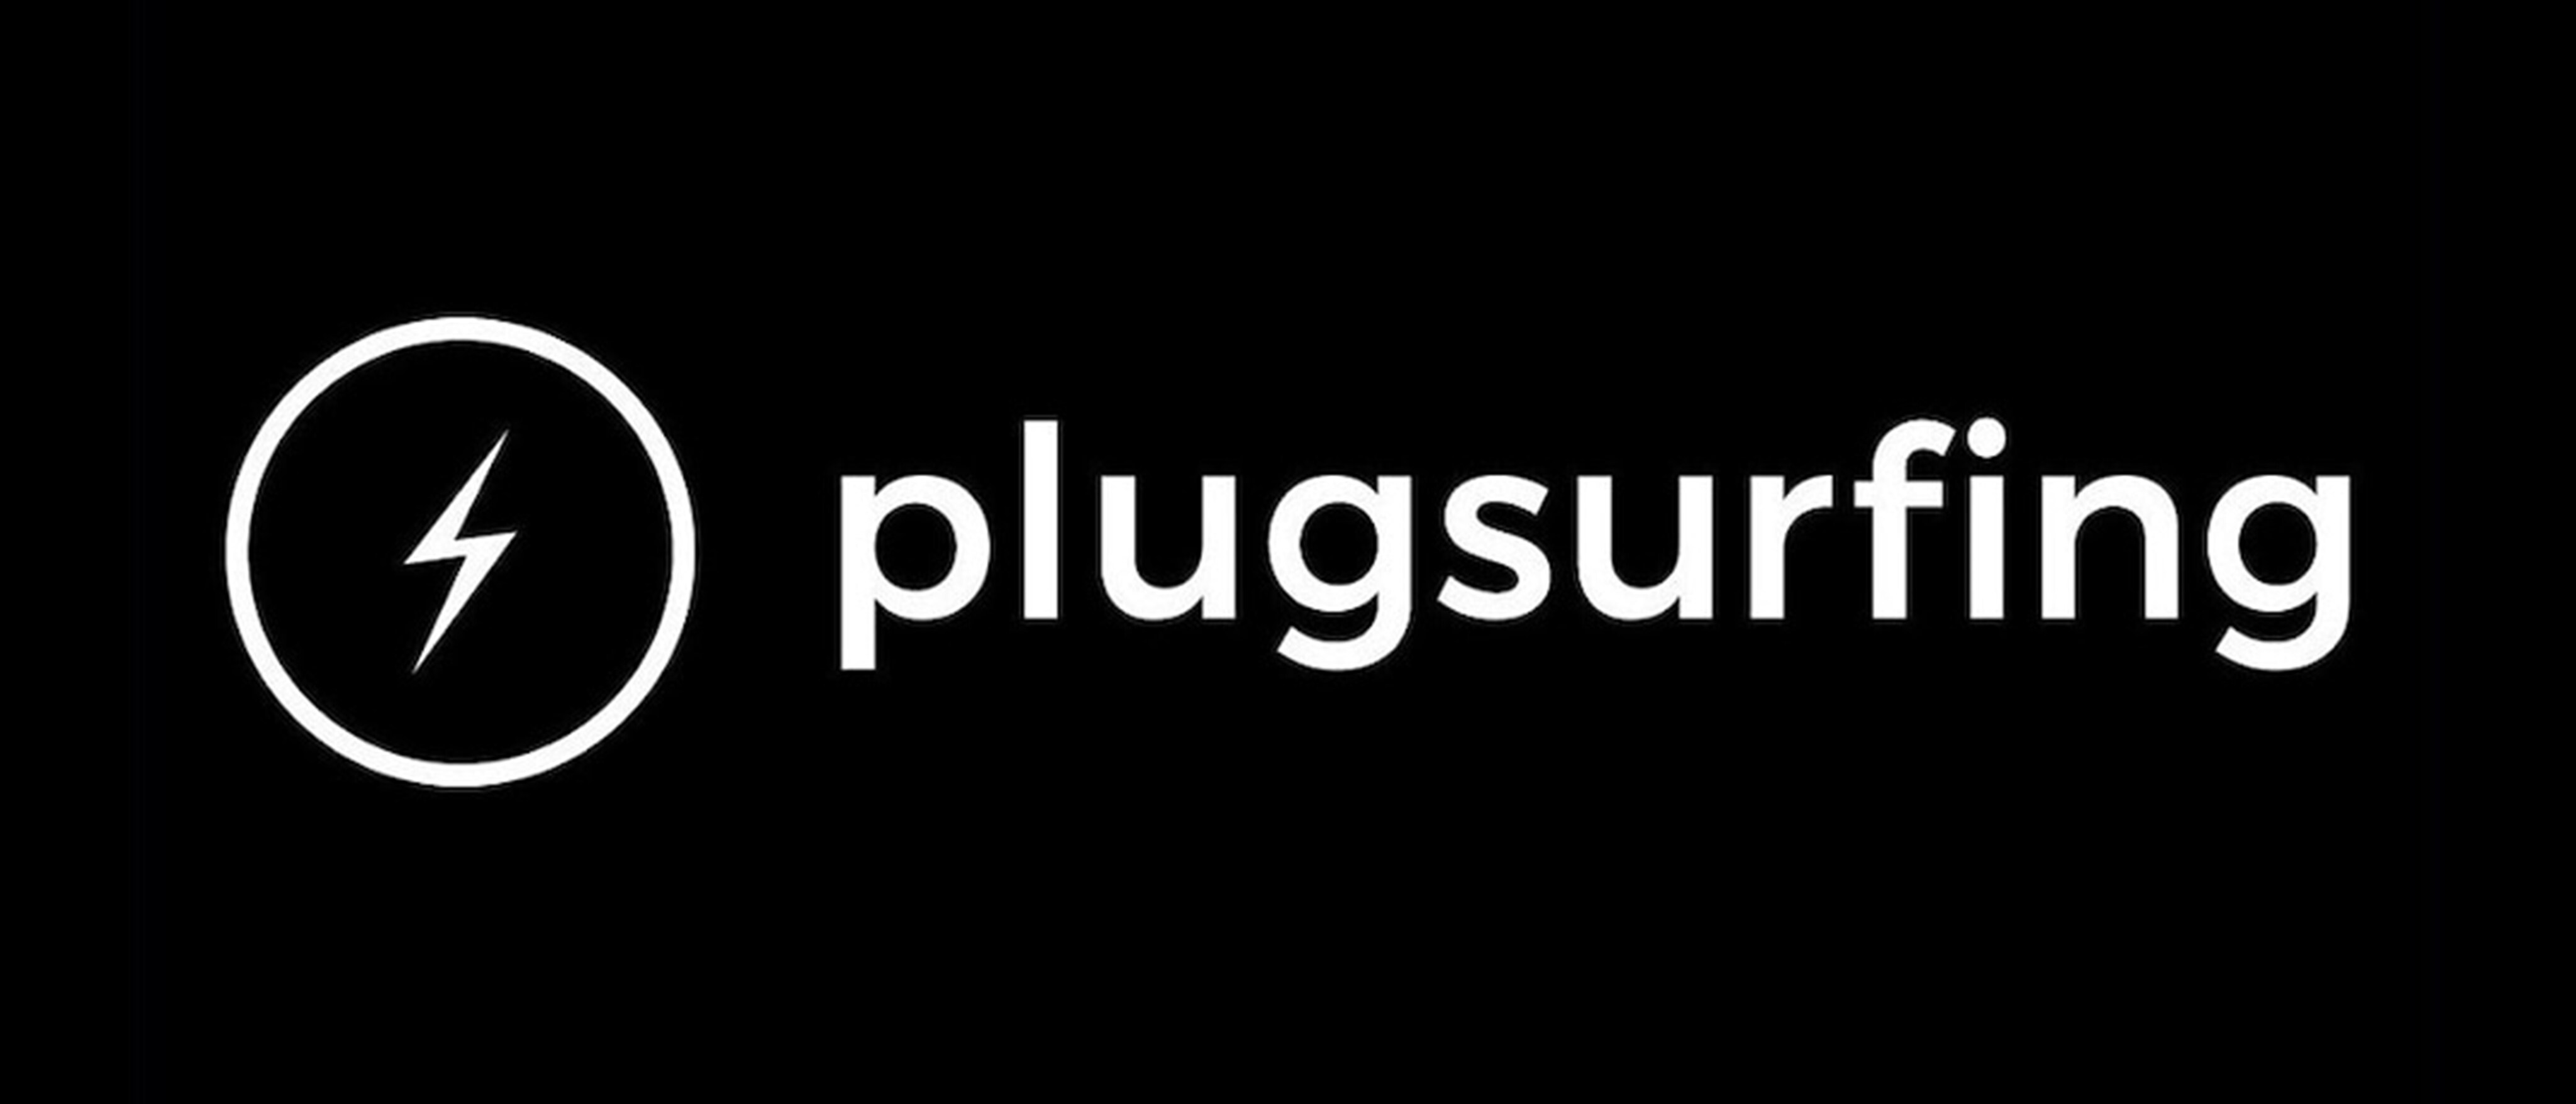 Plugsurfing logo.